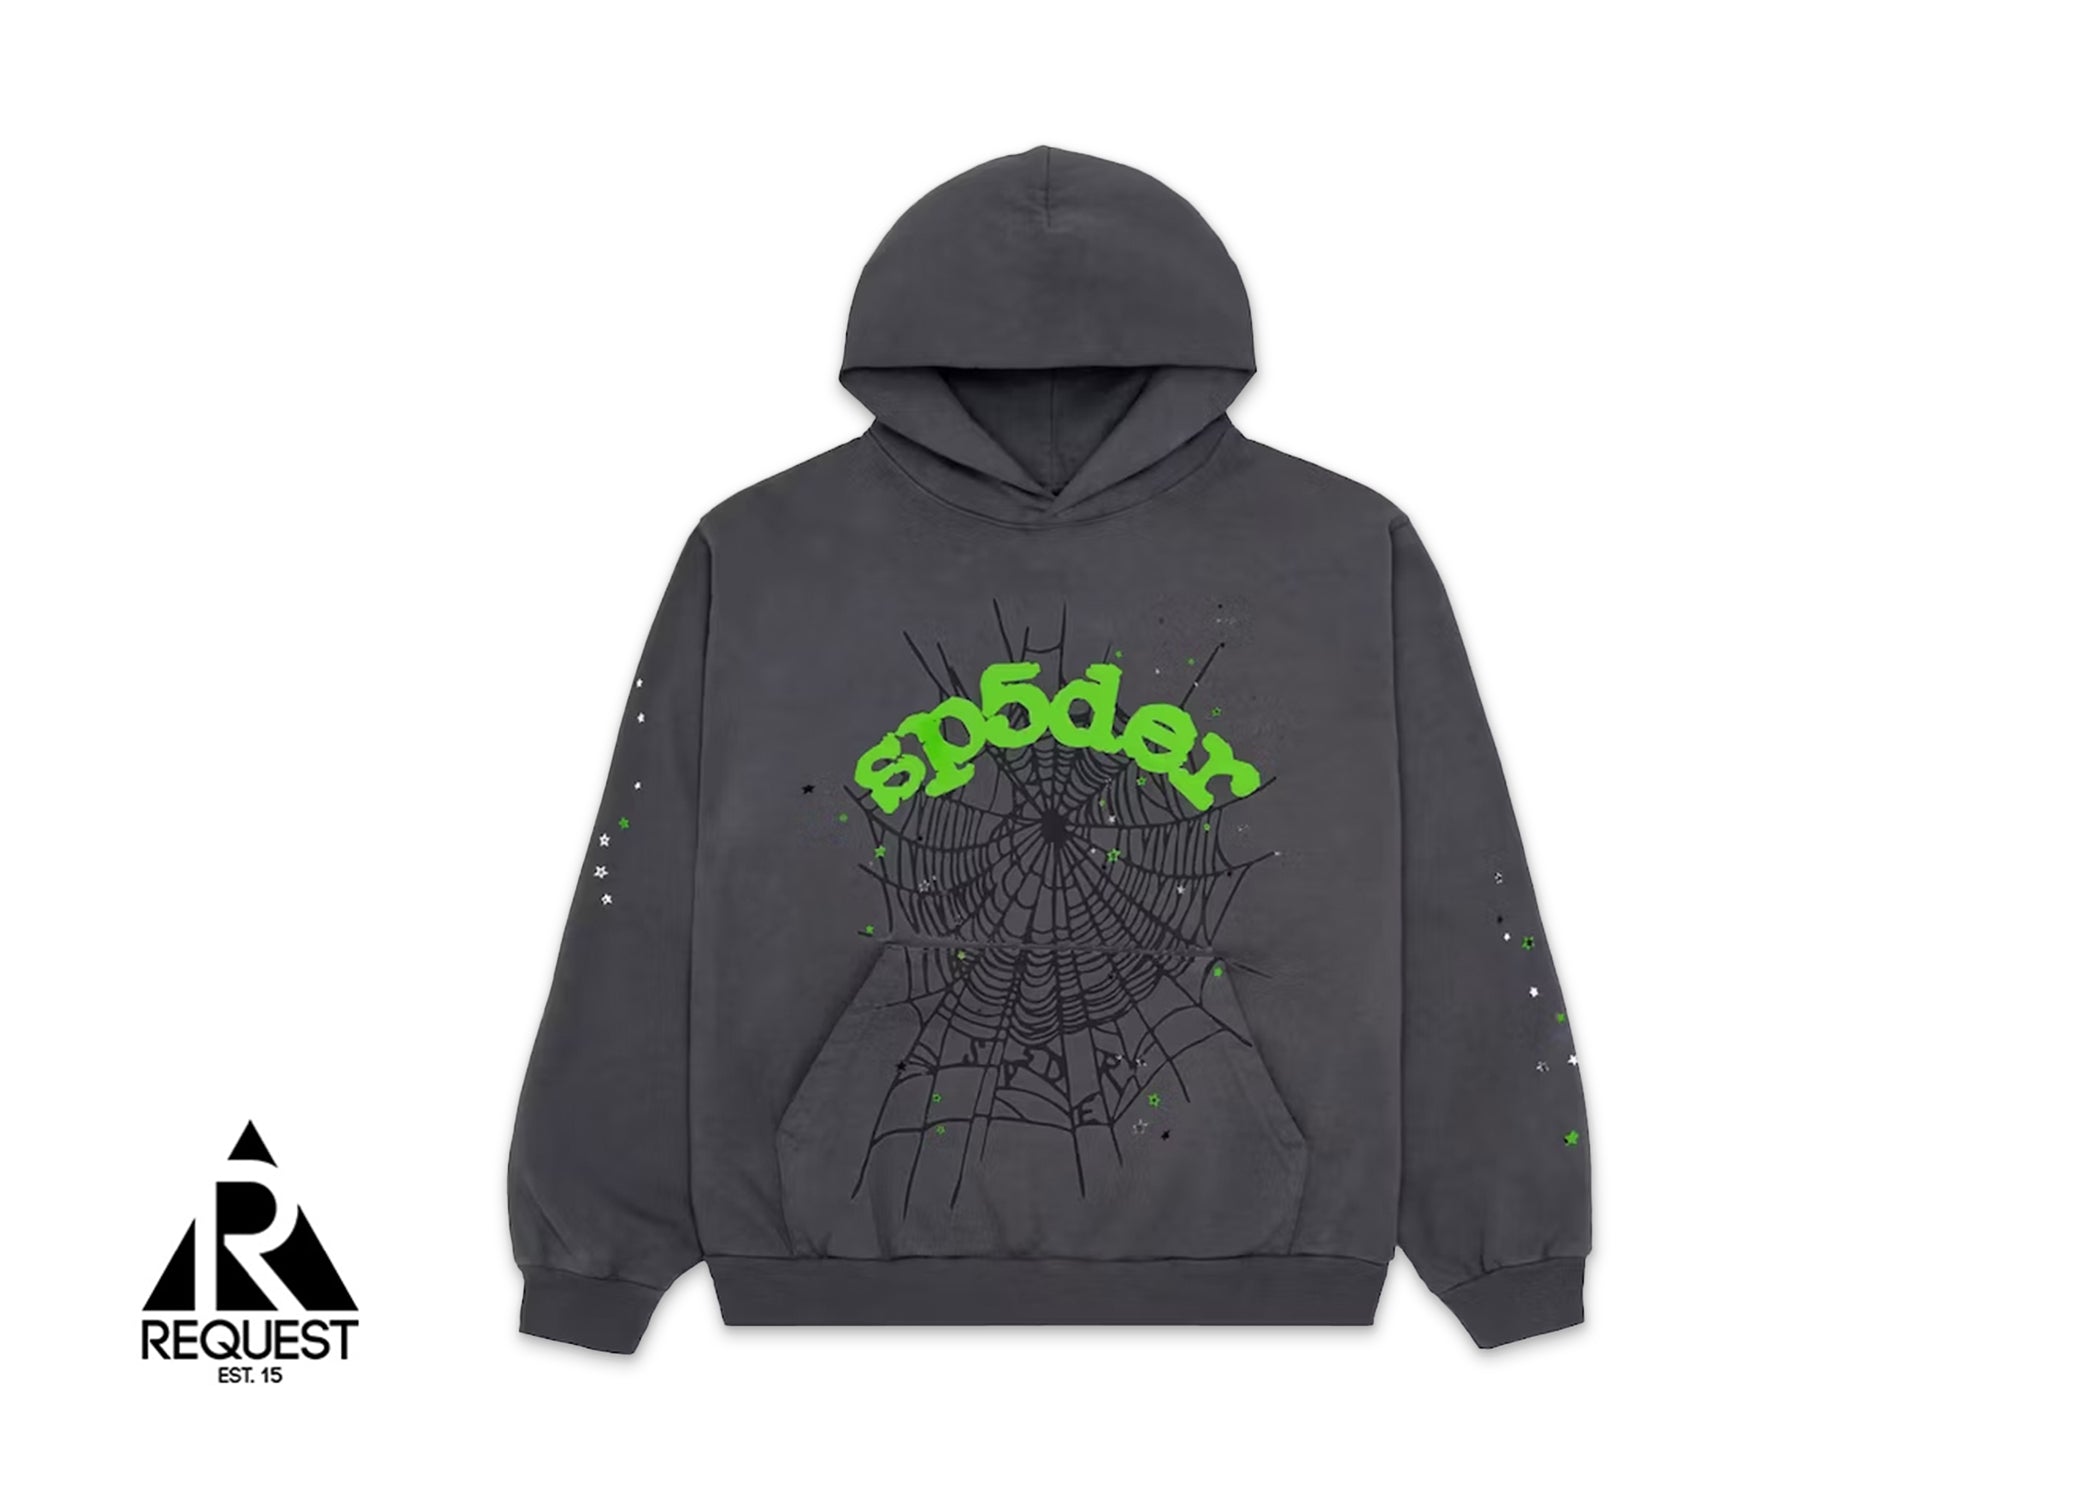 Sp5der Websuit Hoodie “Grey Green”